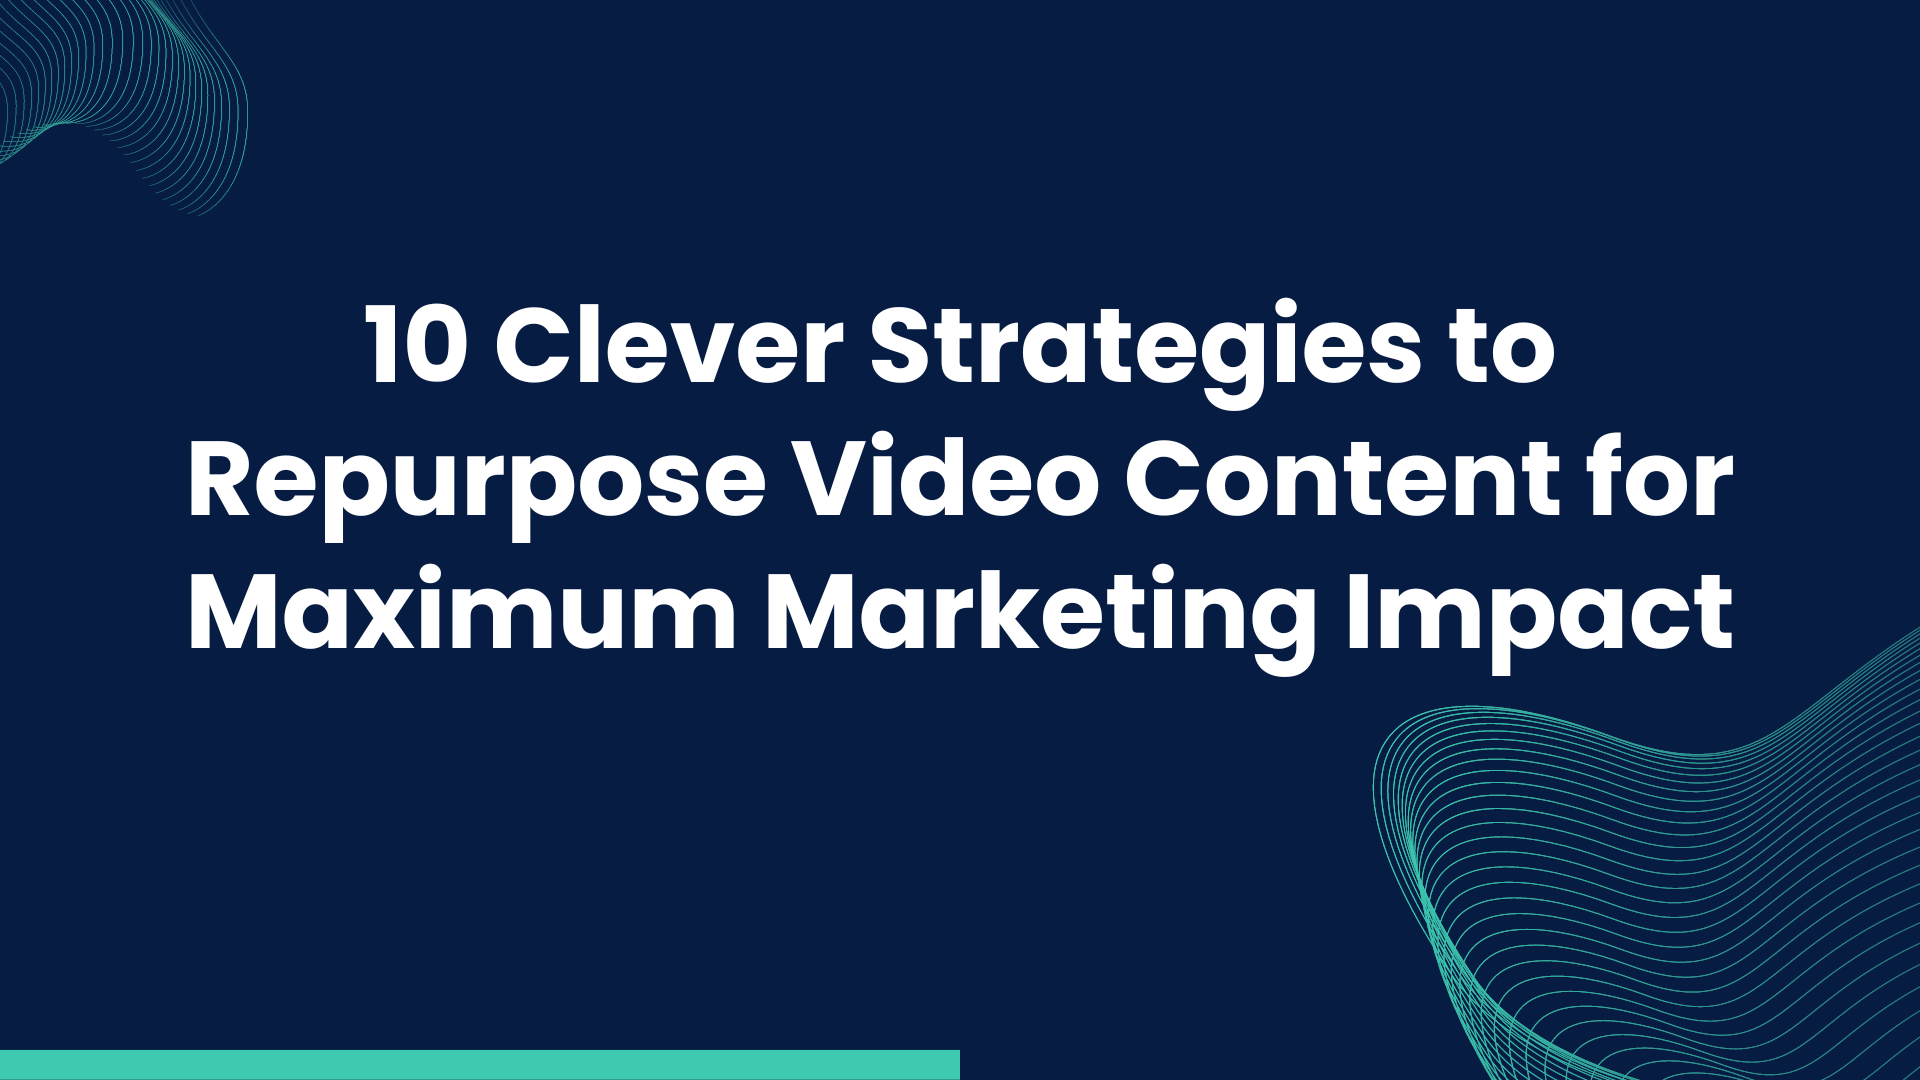 10 Clever Strategies to Repurpose Video Content for Maximum Marketing Impact